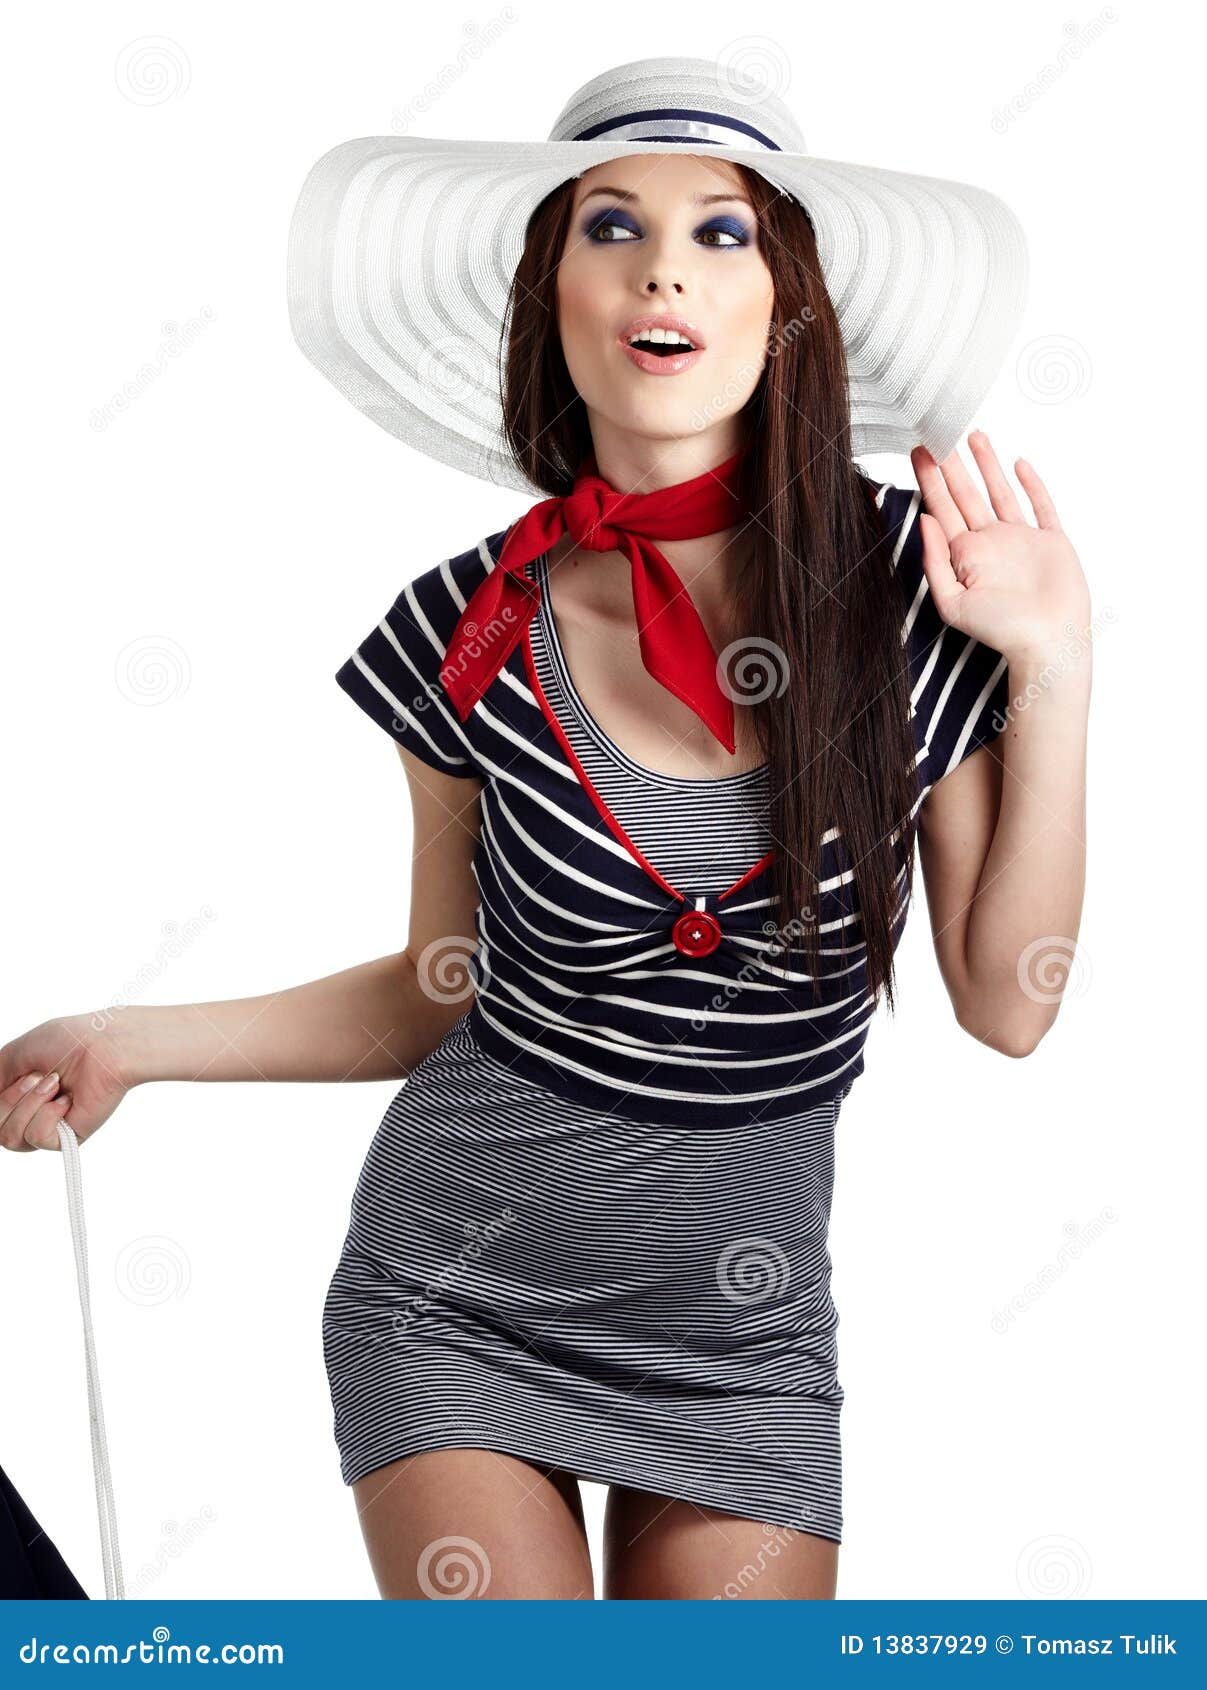 sailor fashion style